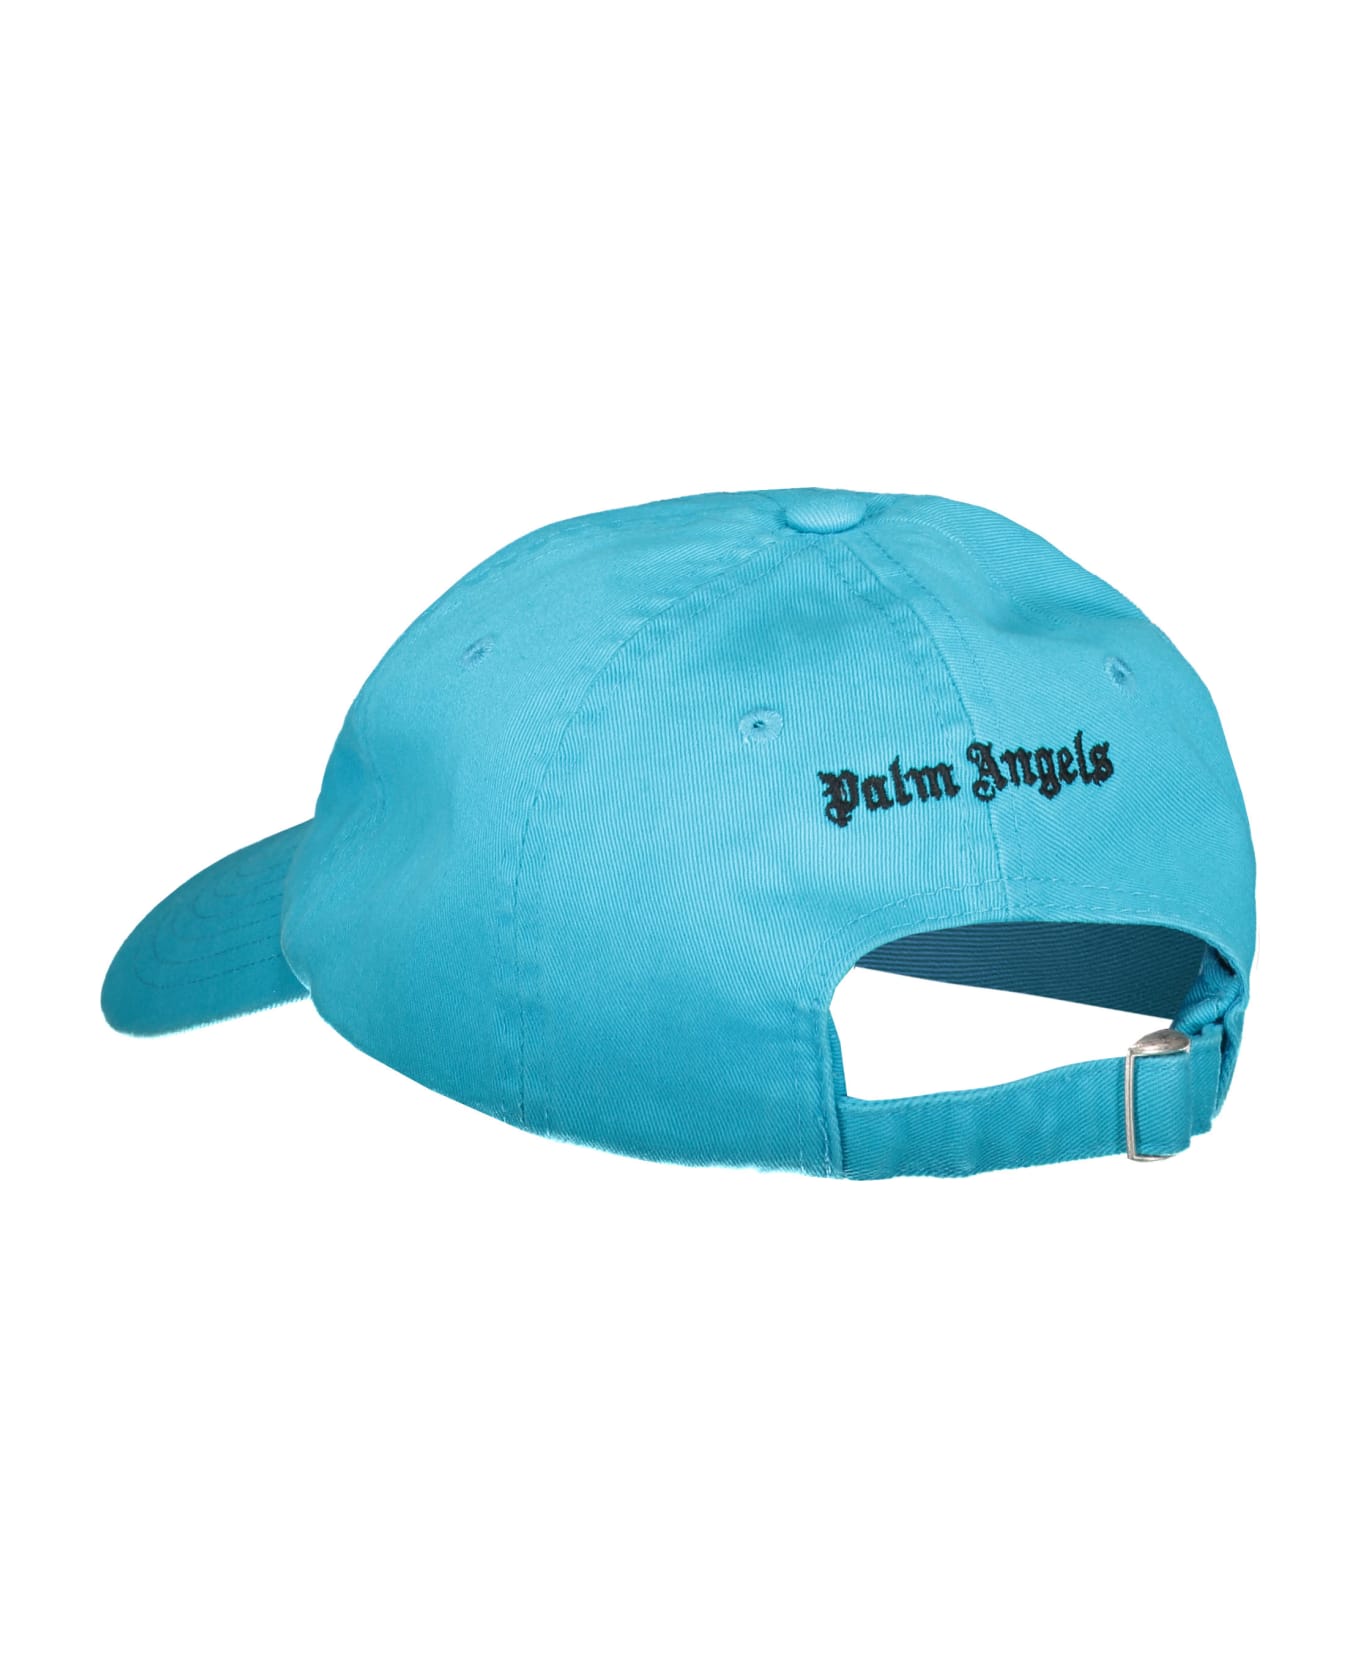 Palm Angels Embroidered Baseball Cap - Light Blue 帽子